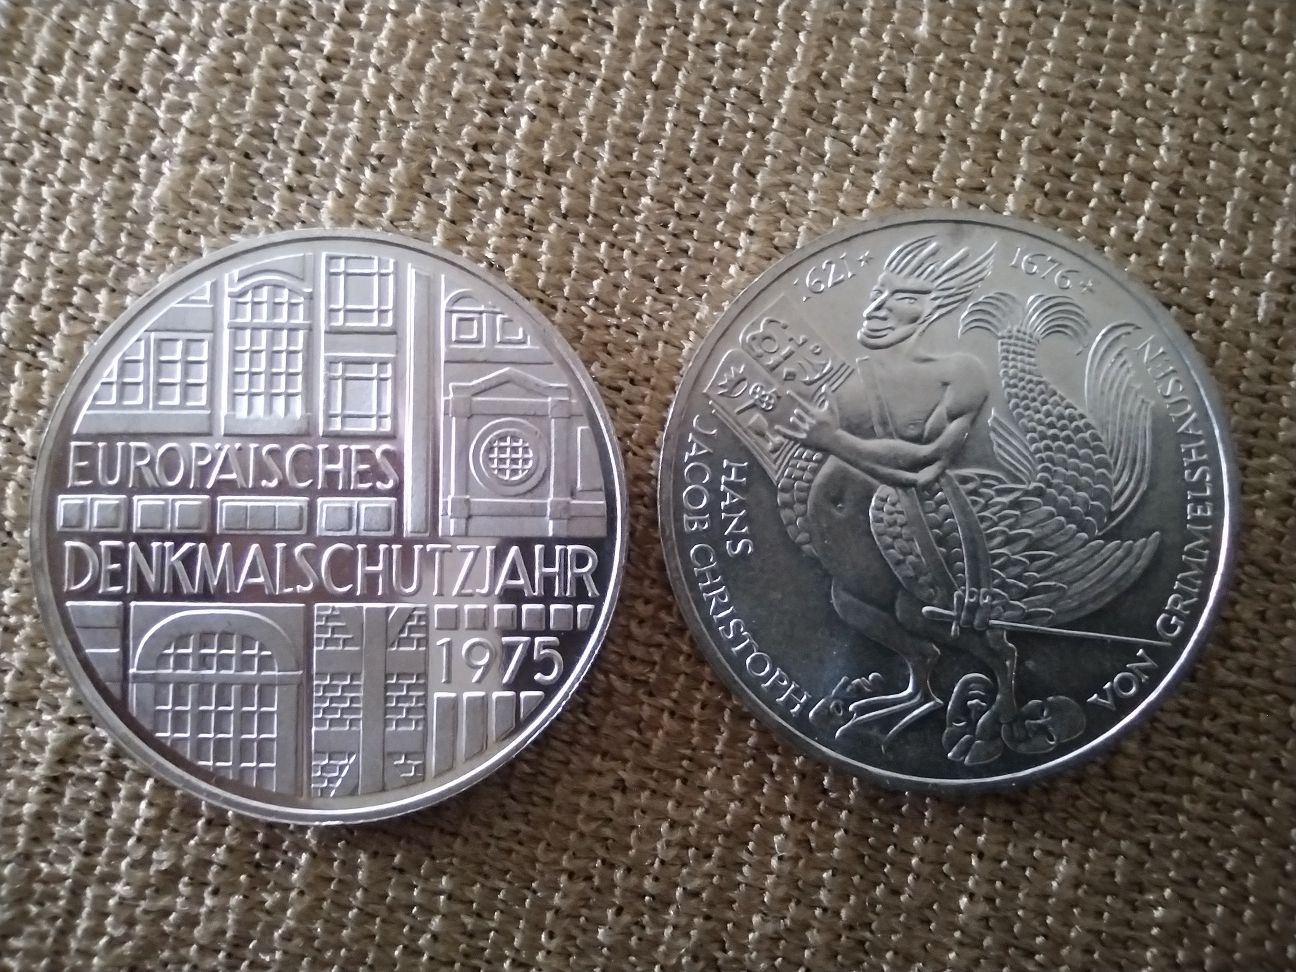 Srebrne monety o nominale 5 marek niemieckich